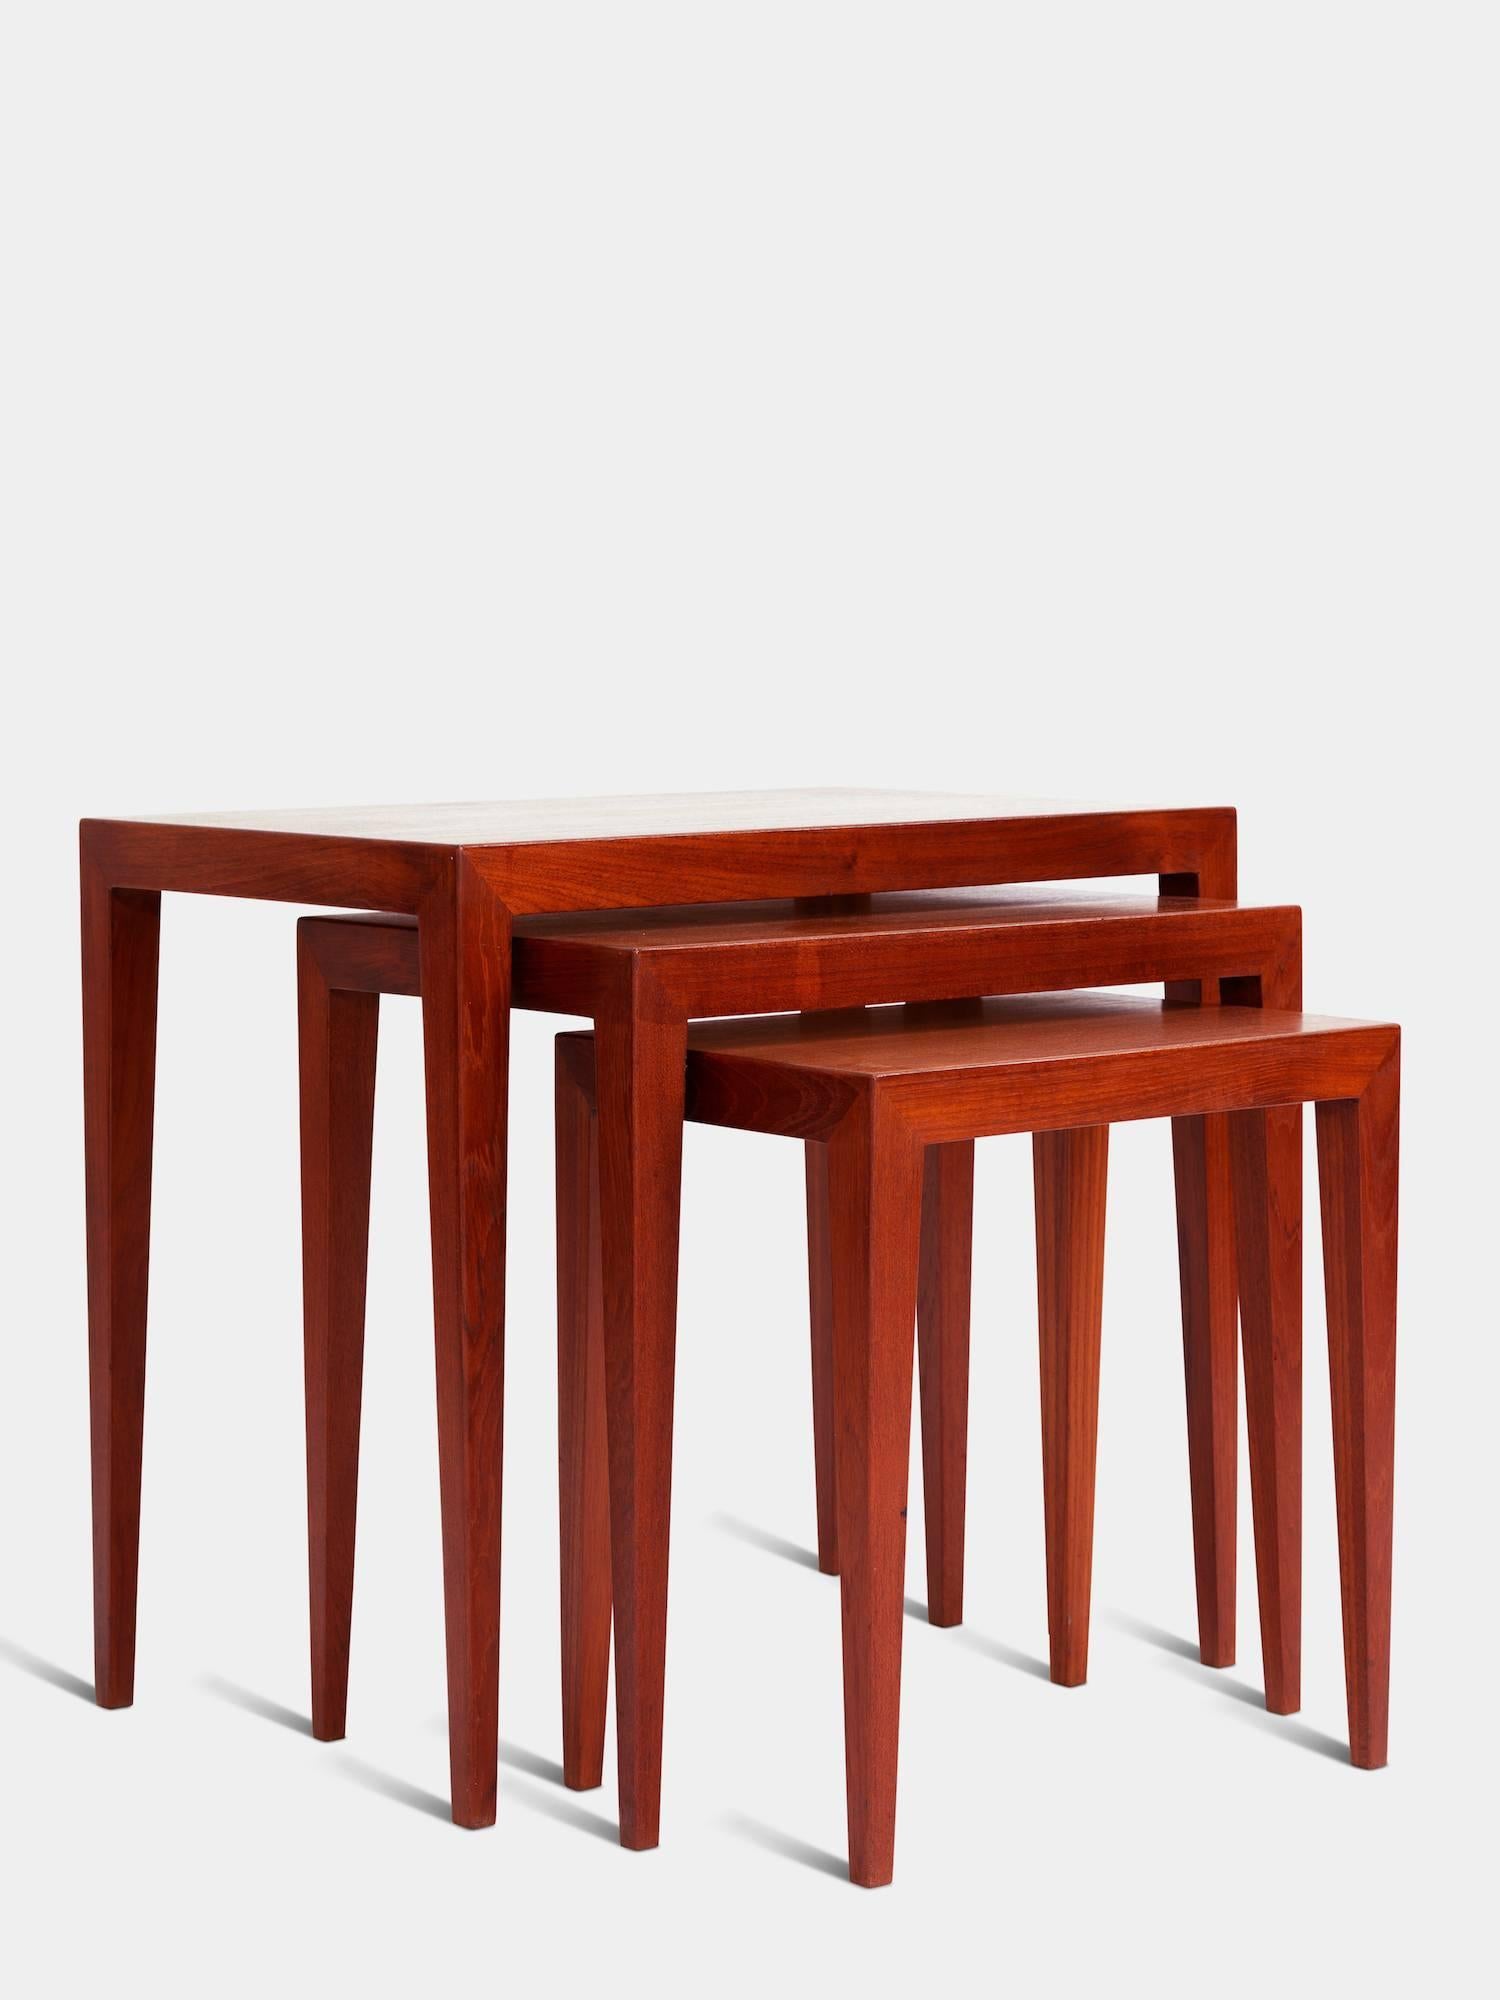 Set of three nesting tables in teak.
Designed by Severin Hansen in 1957.
Manufactured by Haderslev Møbelsnedkerier.